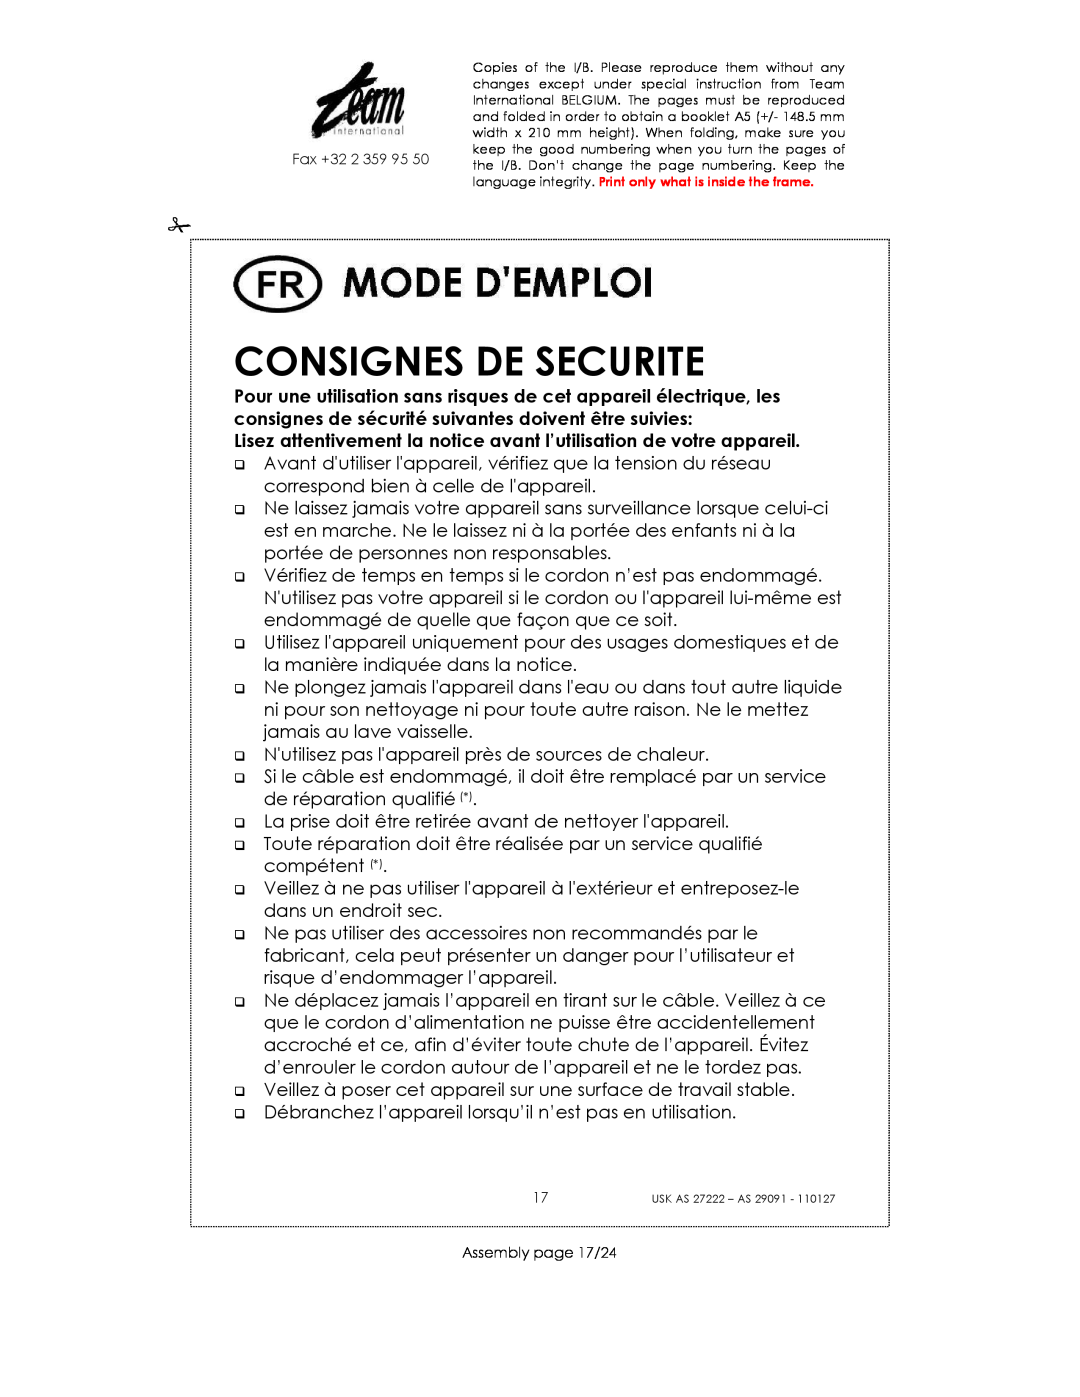 Kalorik USK AS 27222, USK AS 29091 manual Consignes De Securite, Fax +32 2 359 95, Assembly page 17/24 